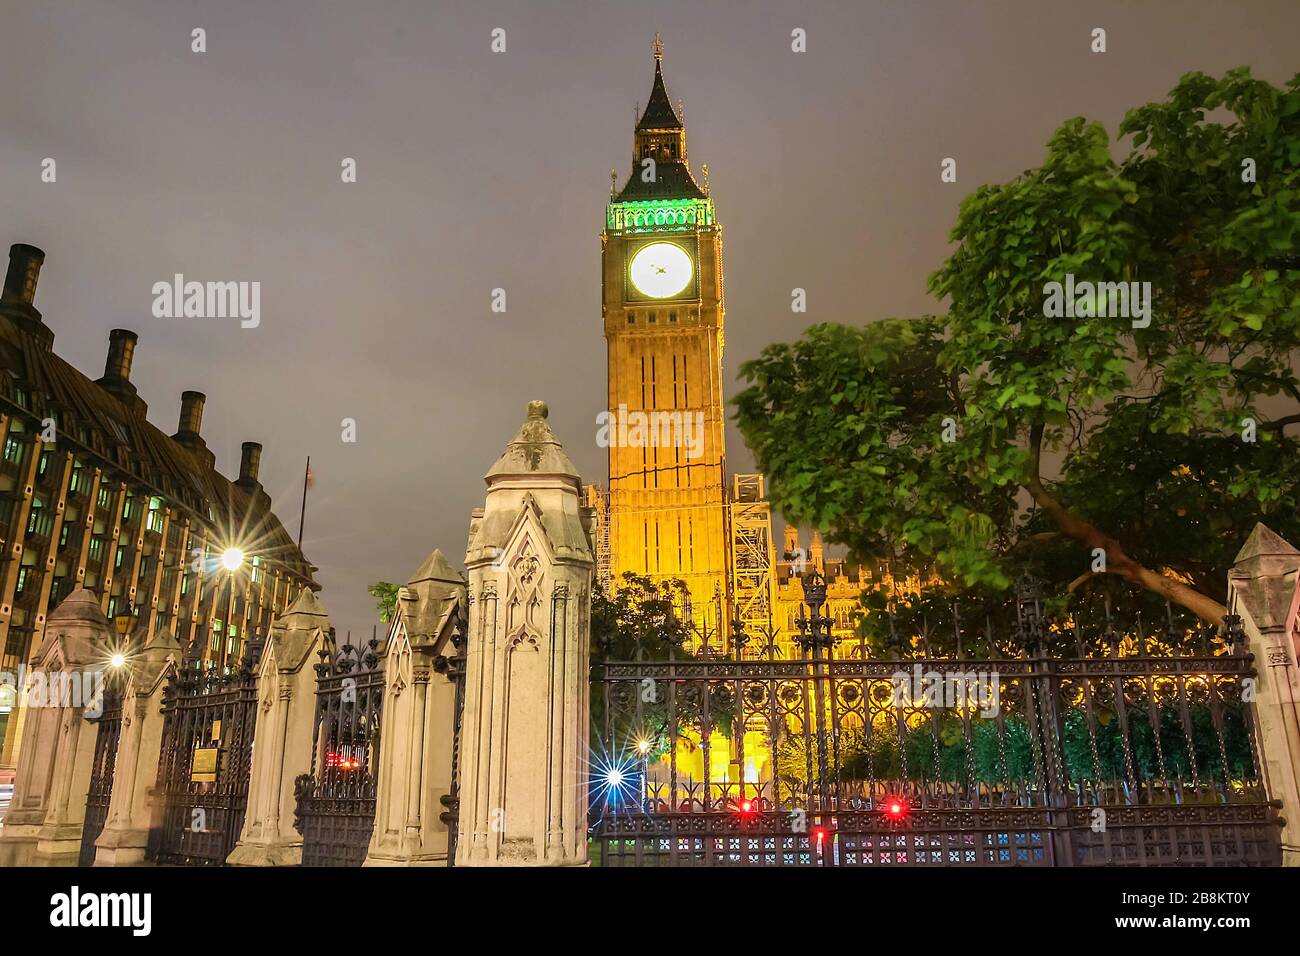 The Big Ben clock tower at night, London, UK. Stock Photo